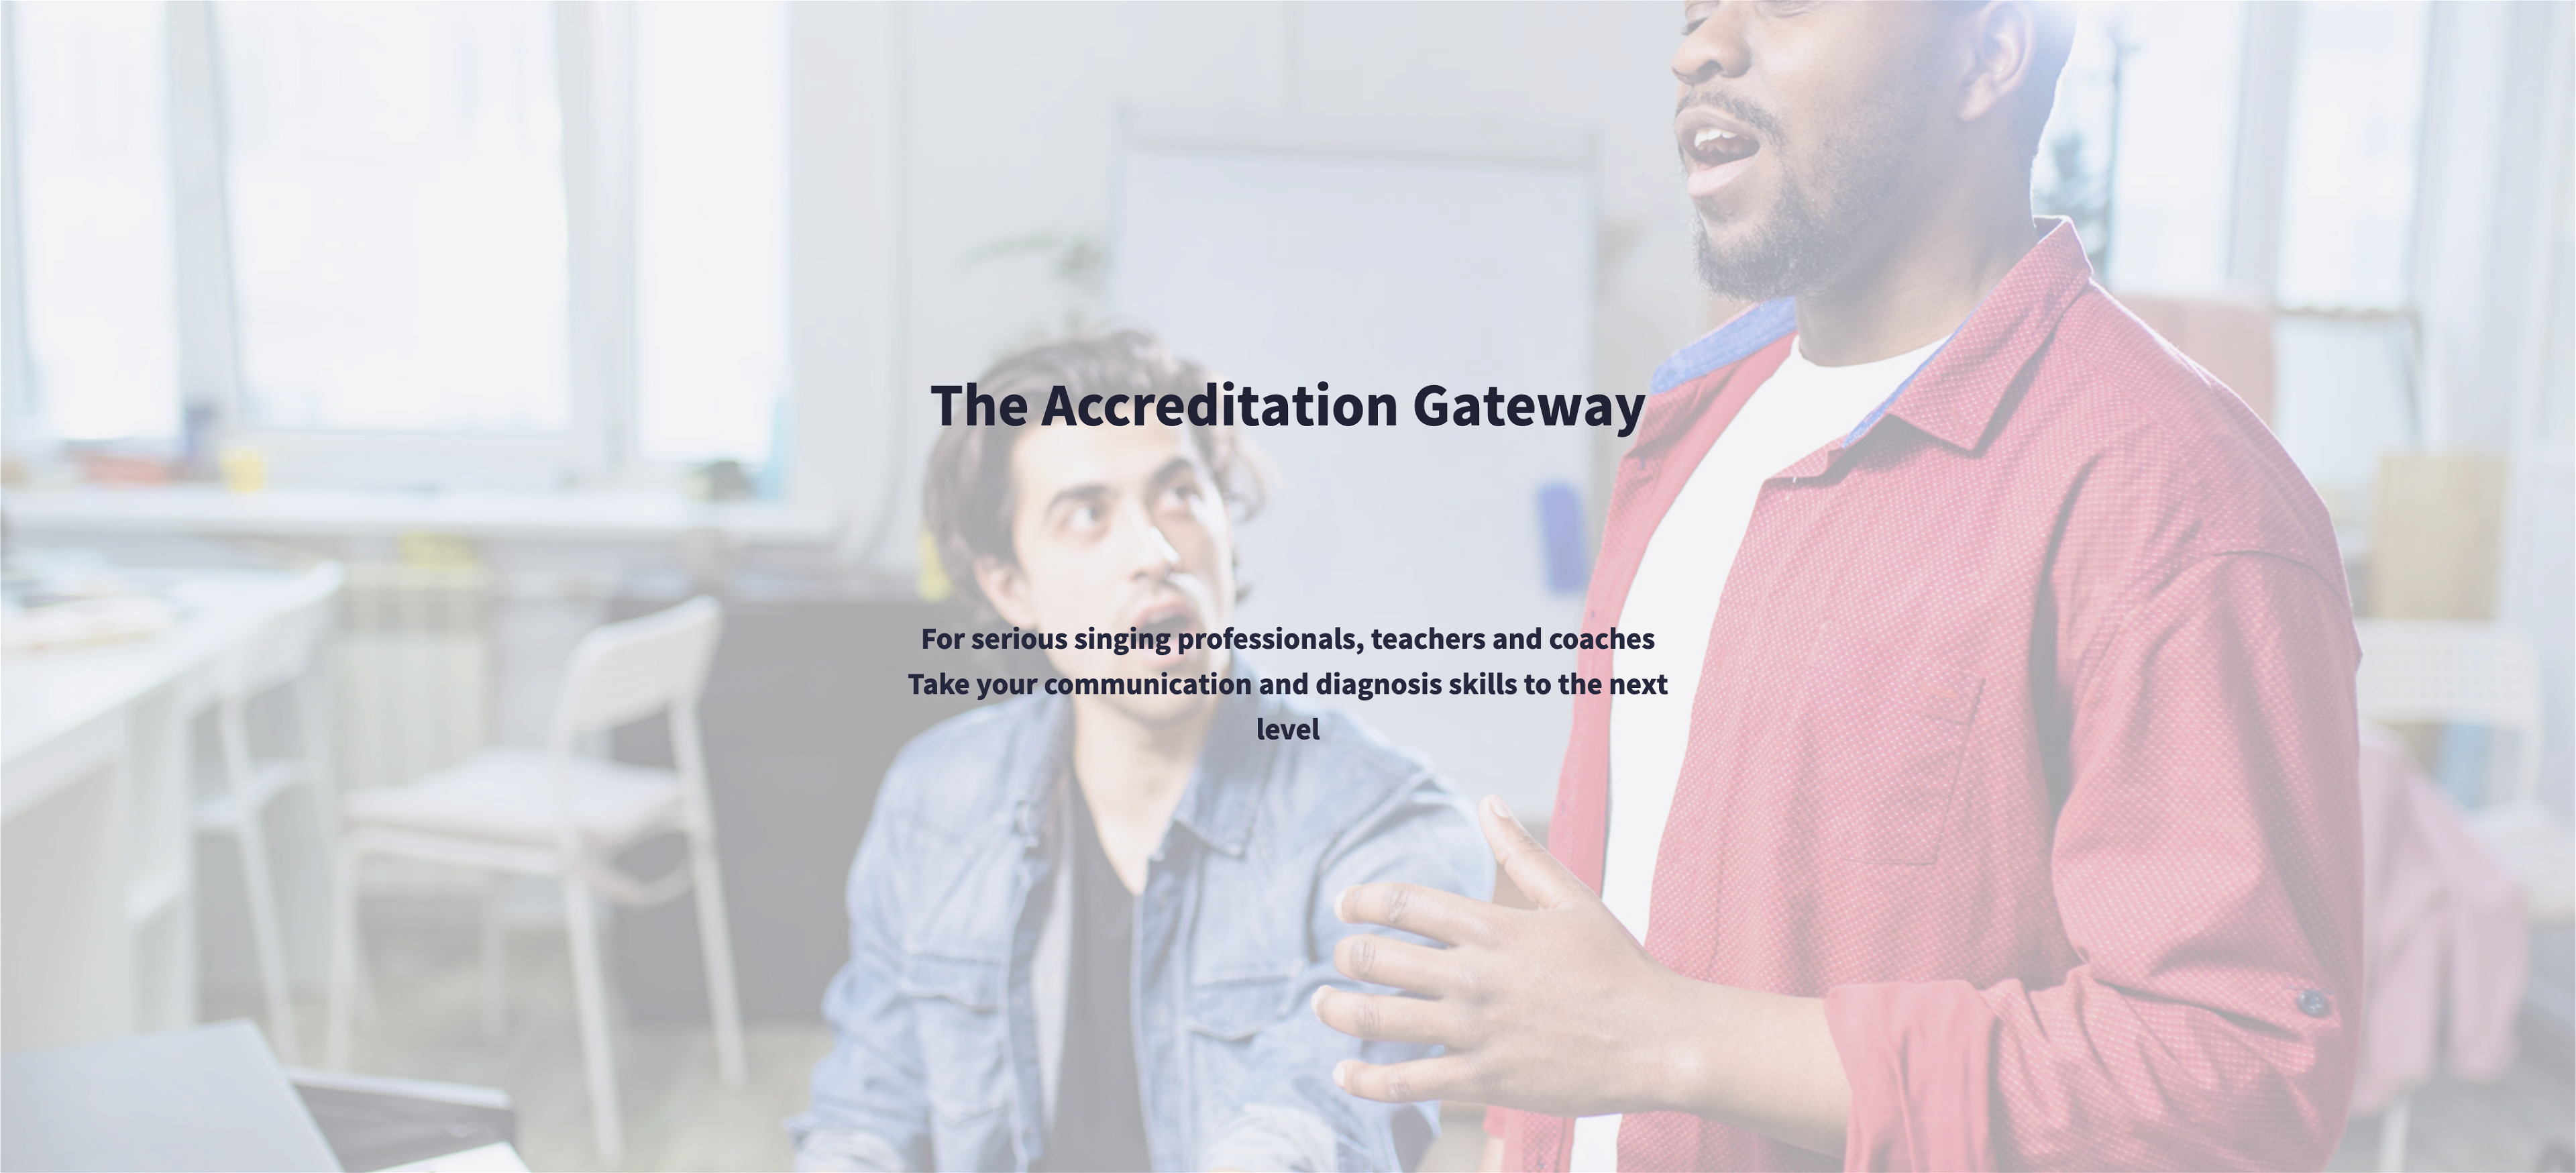 The Accreditation Gateway